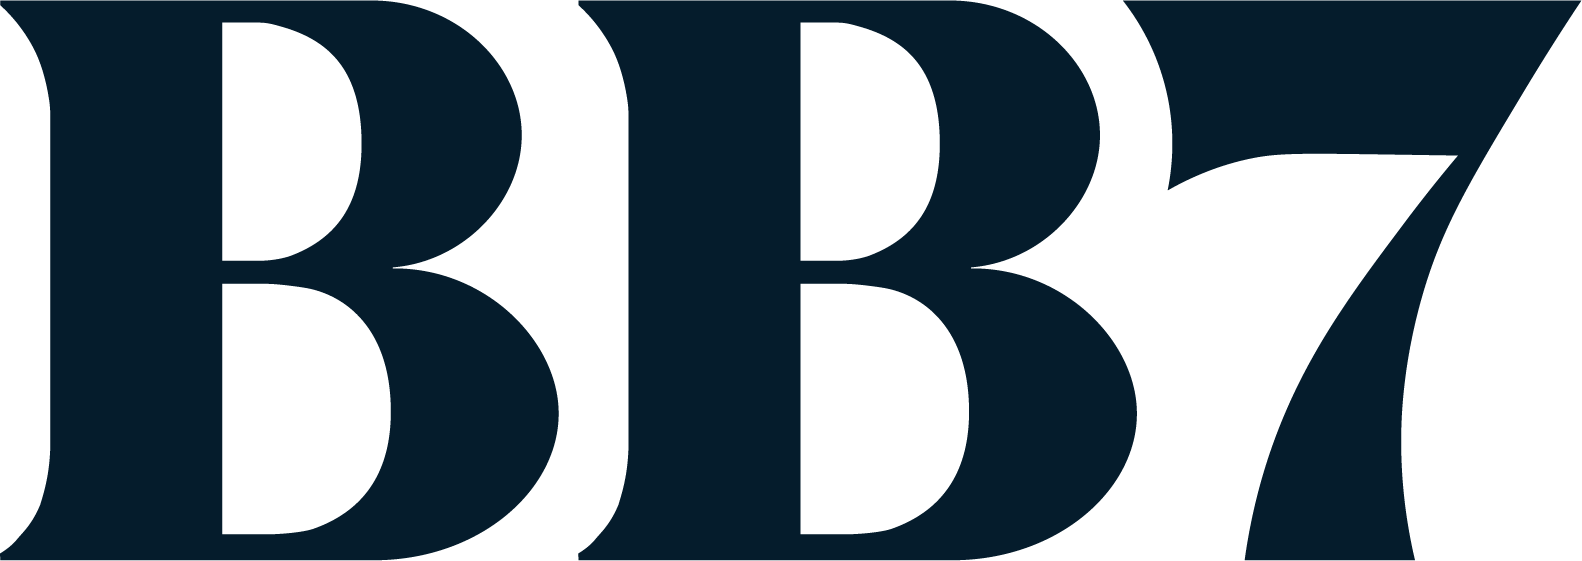 BB7 logo@2x